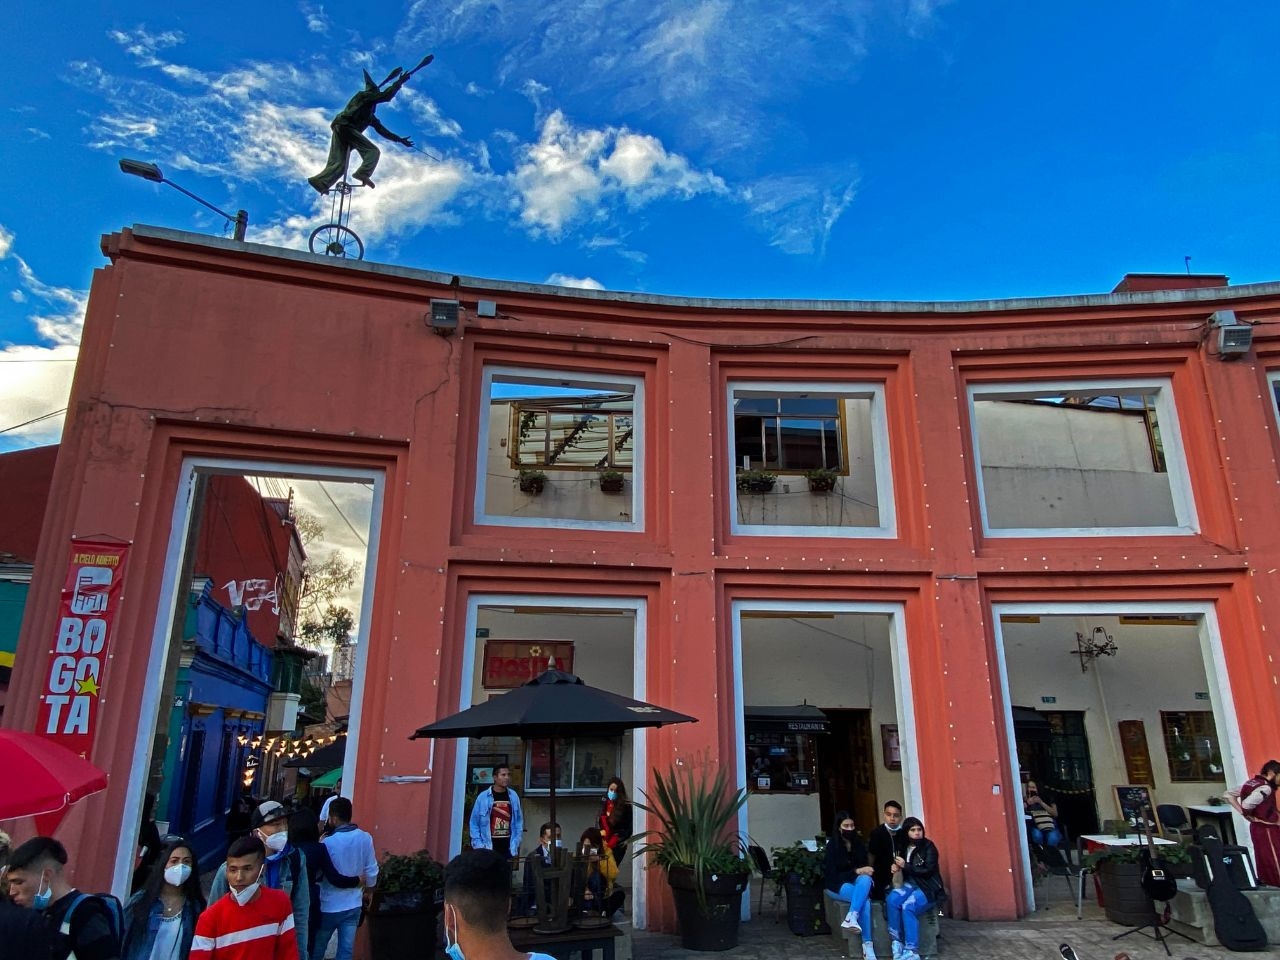 Площадь Чорро де Кеведо и улица Эмбудо Богота, Колумбия